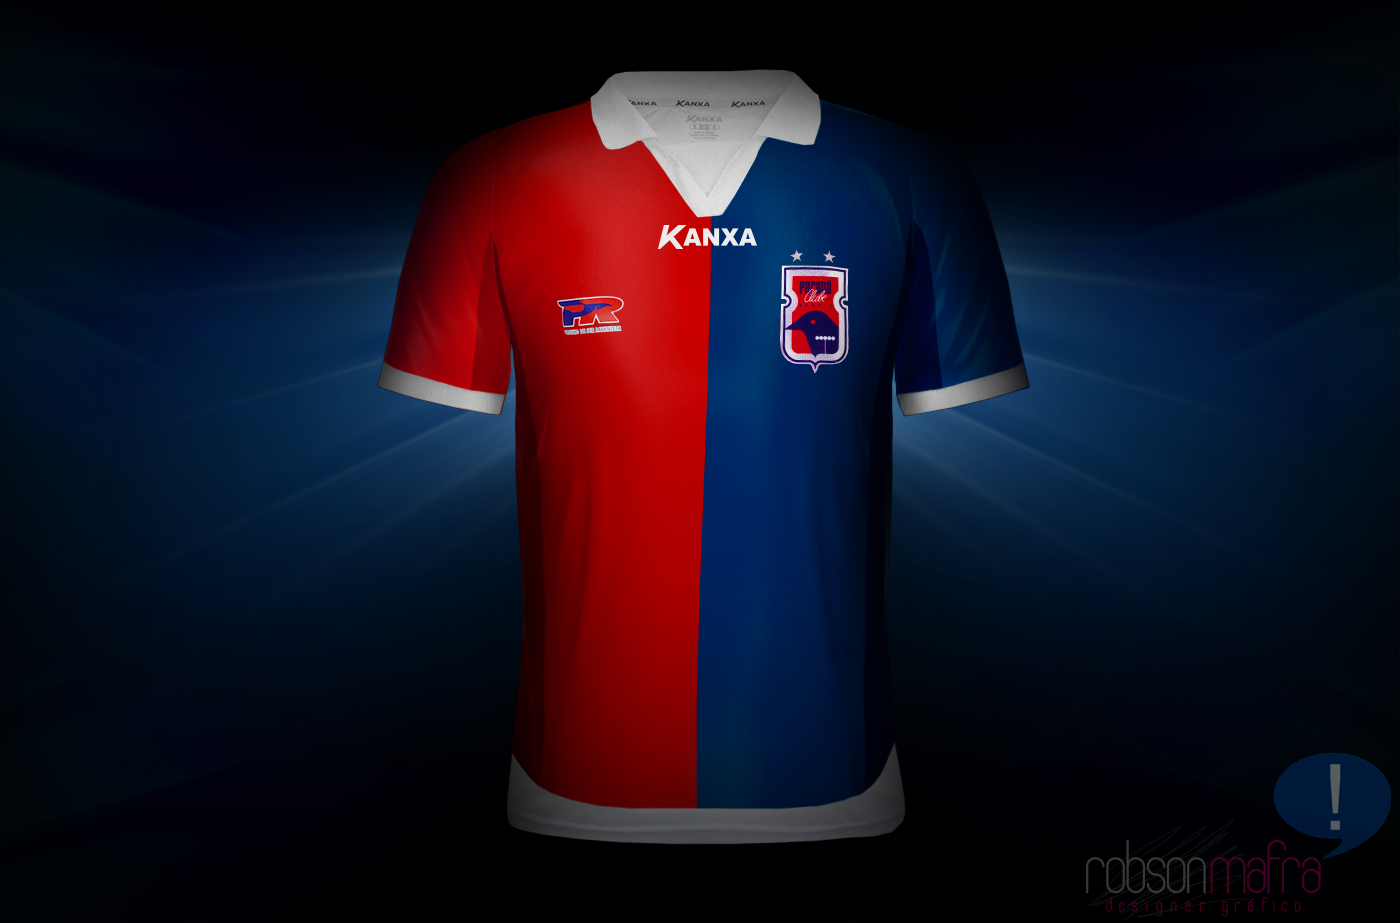 Camisa Oficial I Paraná Clube Kanxa 2012 home